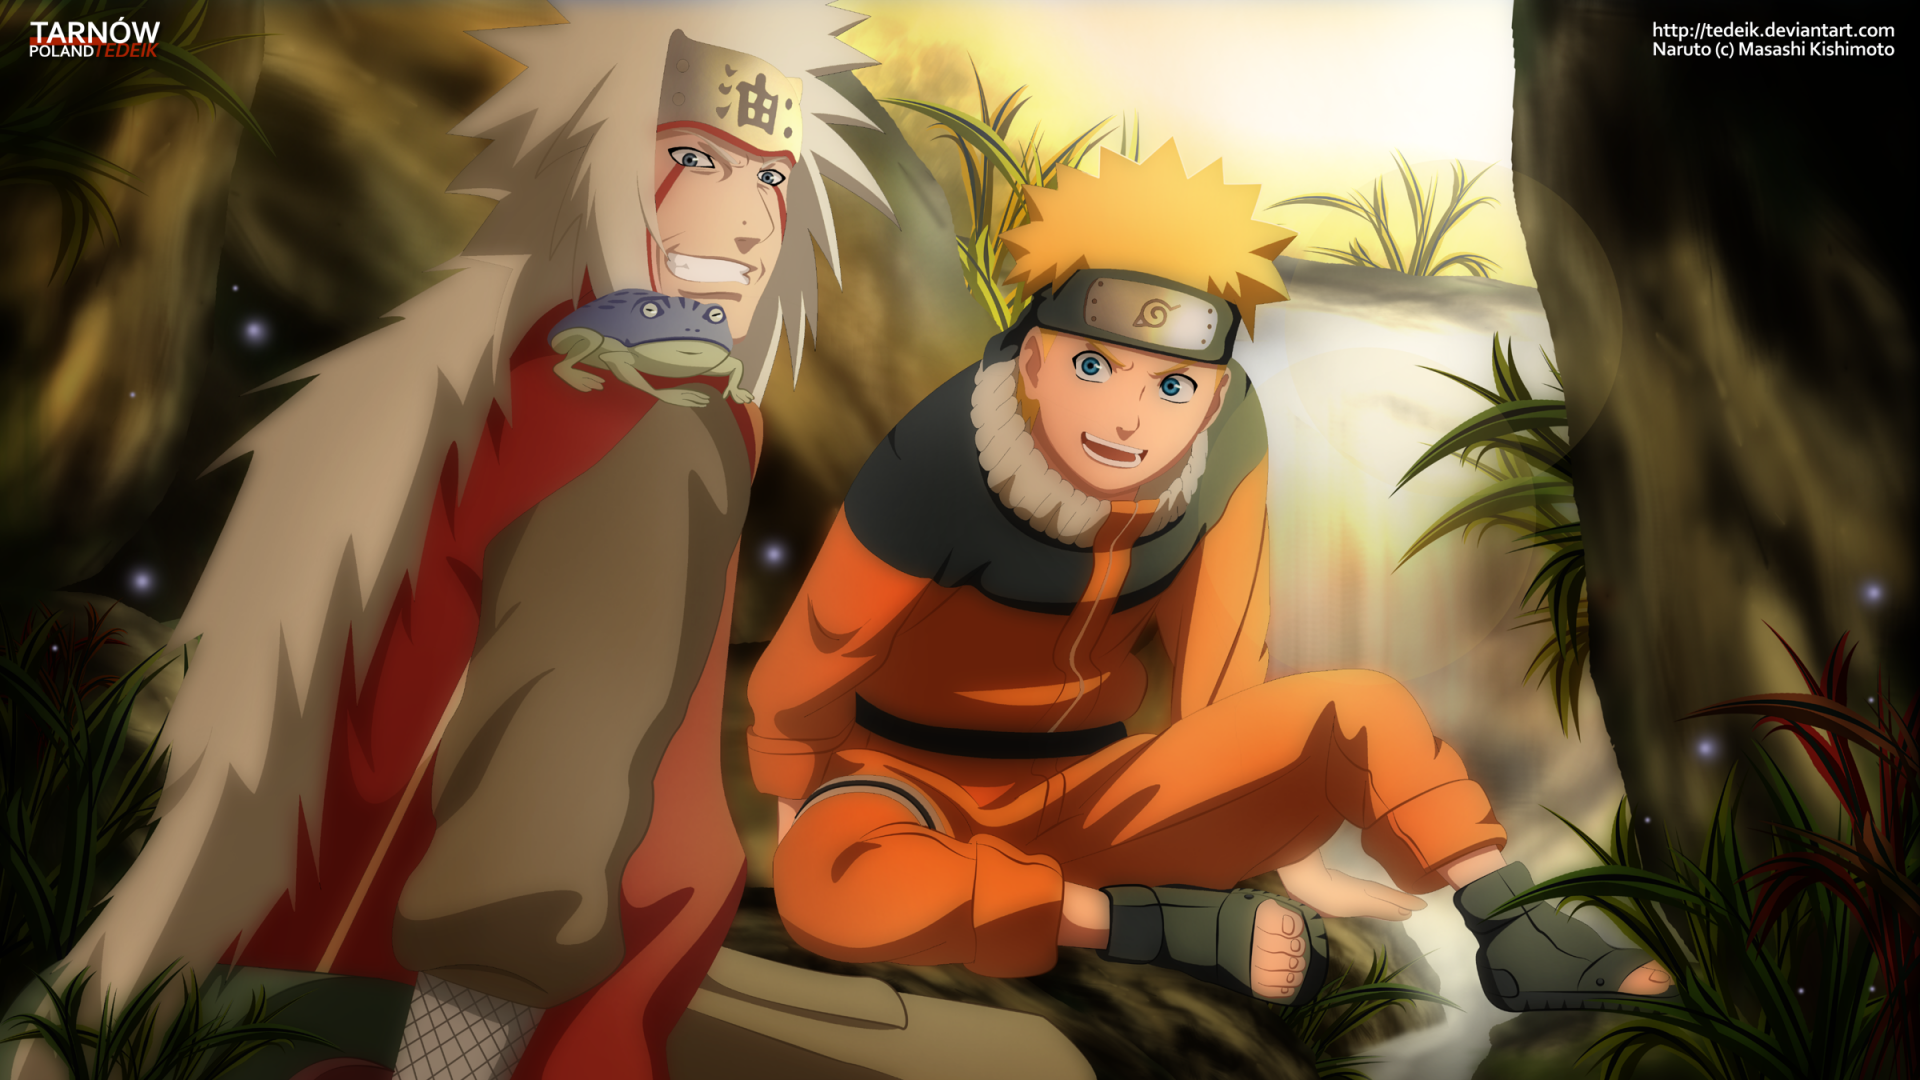 Naruto and Jiraiya HD Wallpaper Background Image 2400x1350 ID 641131 Wallpaper Abyss